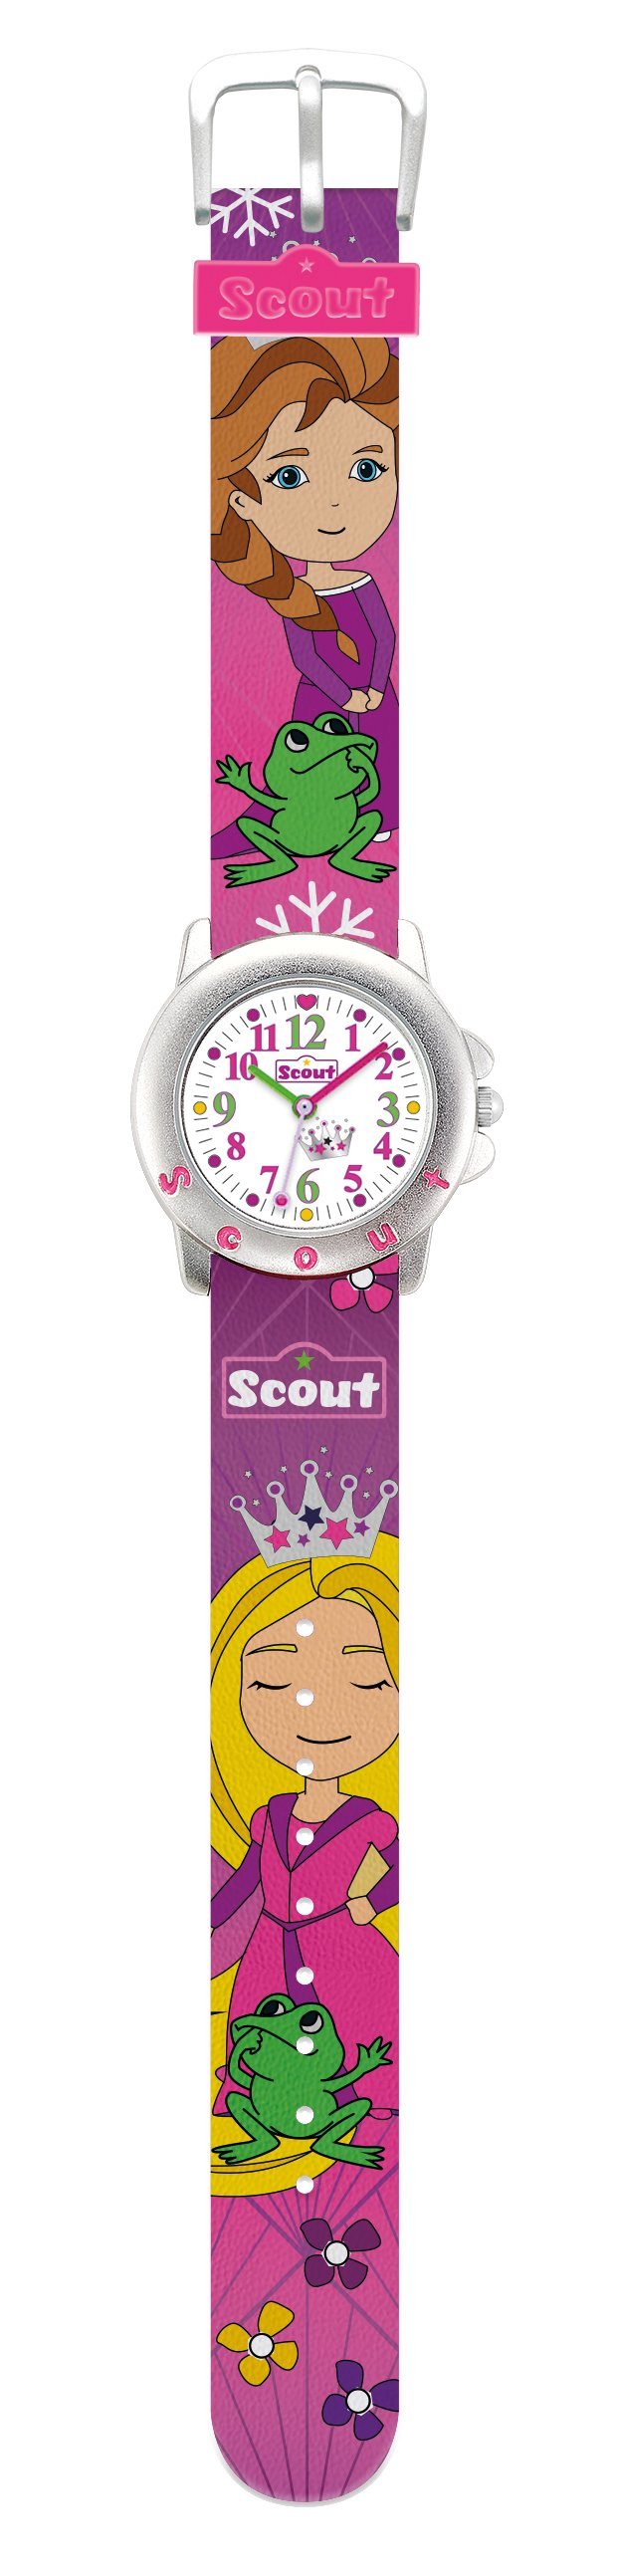 Prinzessinen Star Scout Quarzuhr Kids Armbanduhr Kinder 280393037